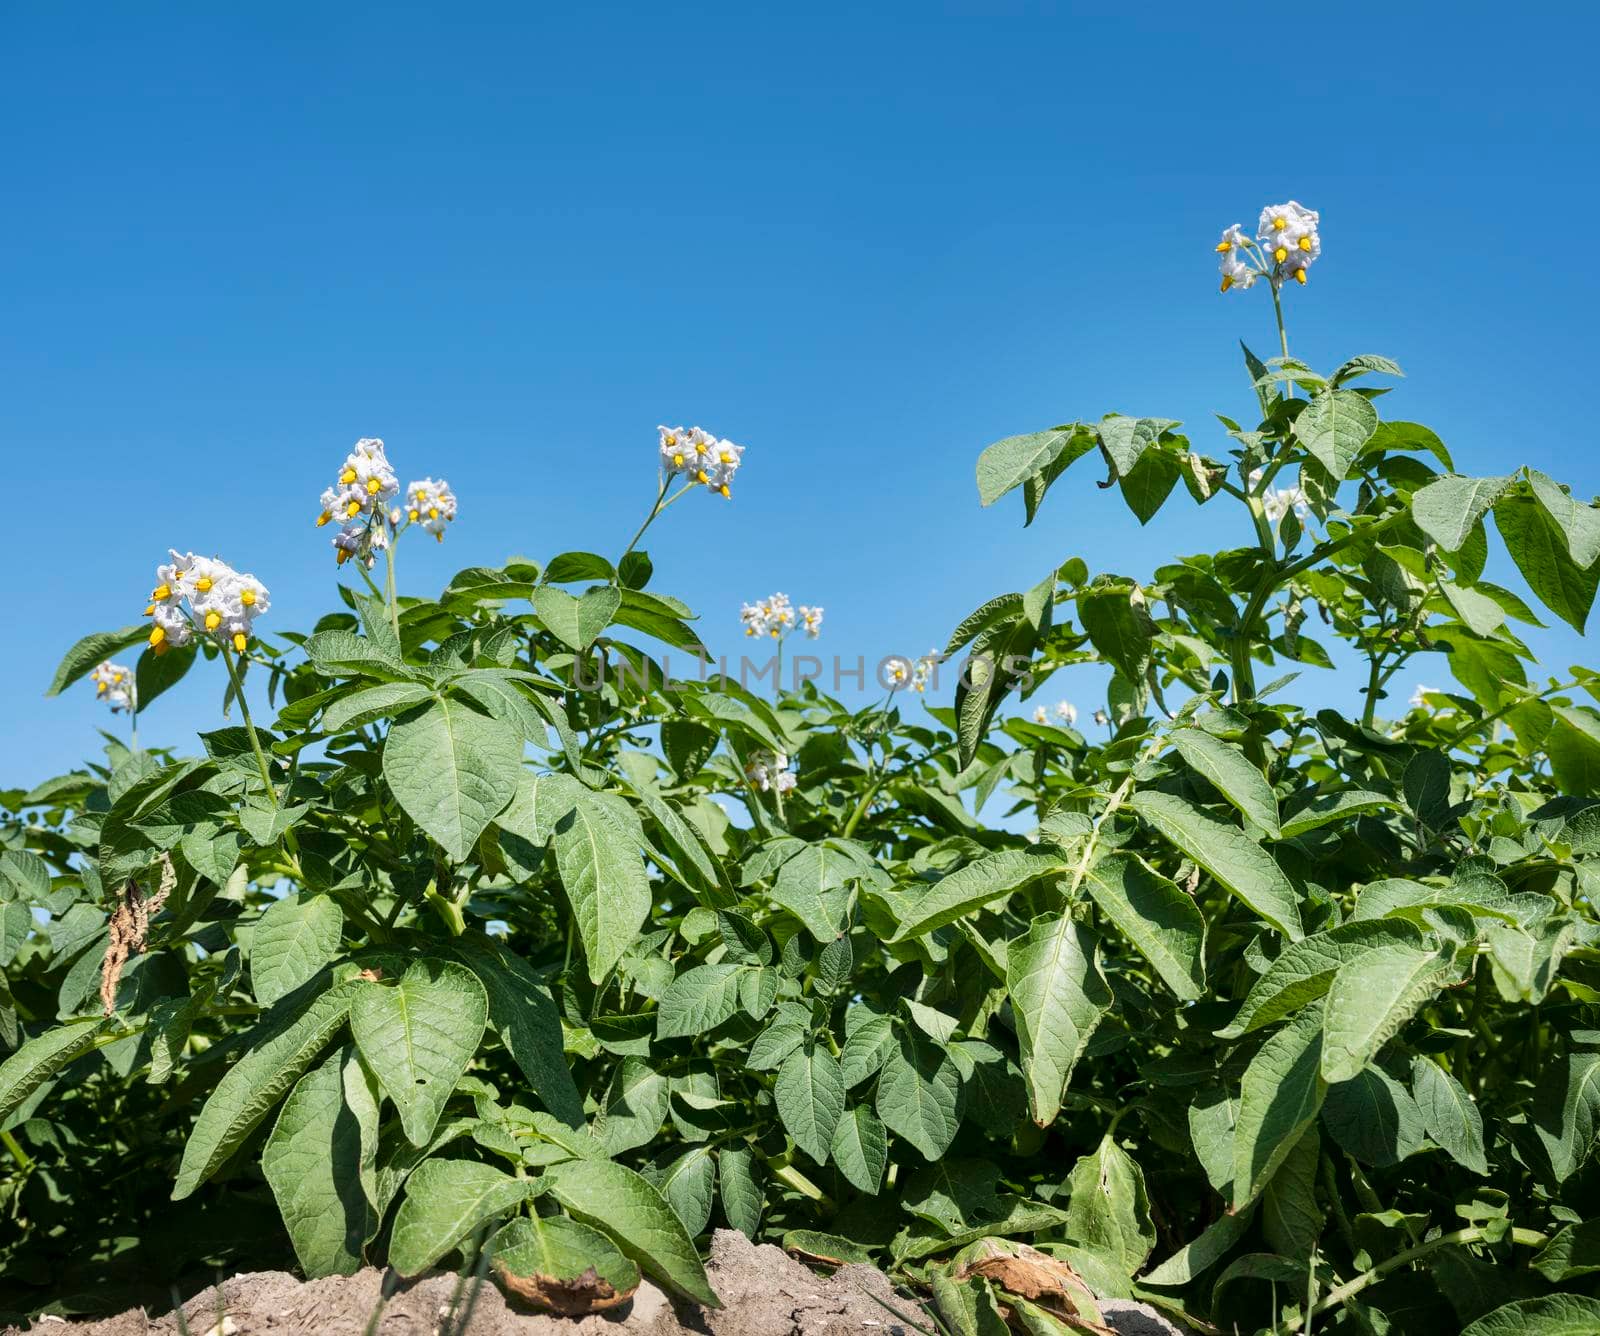 flowering potatoe plants under blue sky in field by ahavelaar